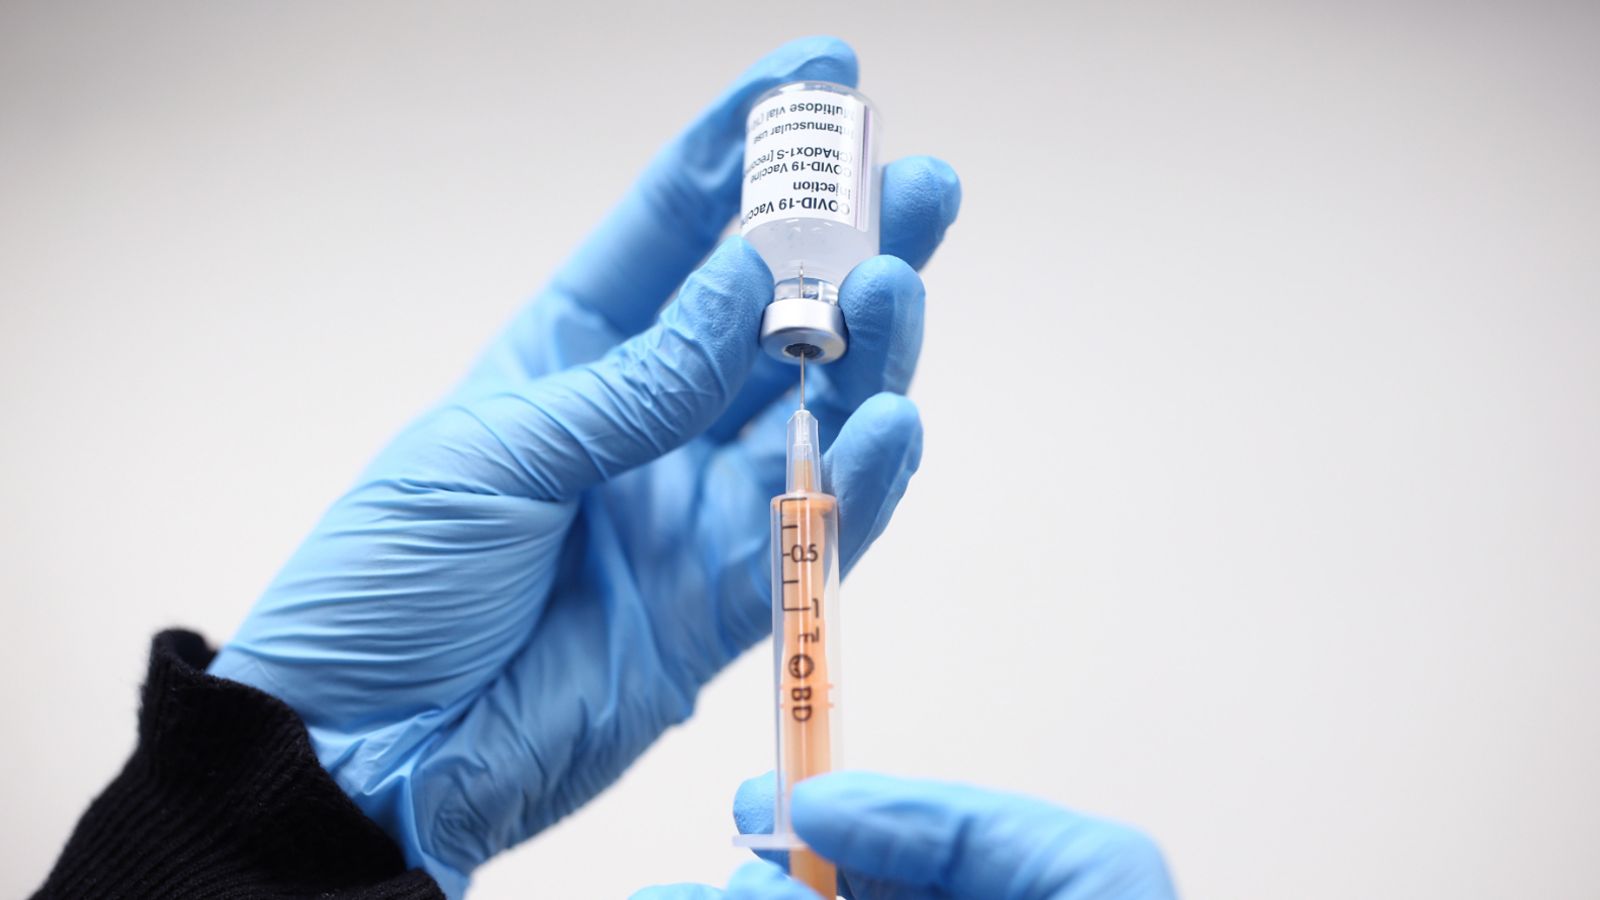 A dose of the Oxford/AstraZeneca coronavirus vaccine being prepared